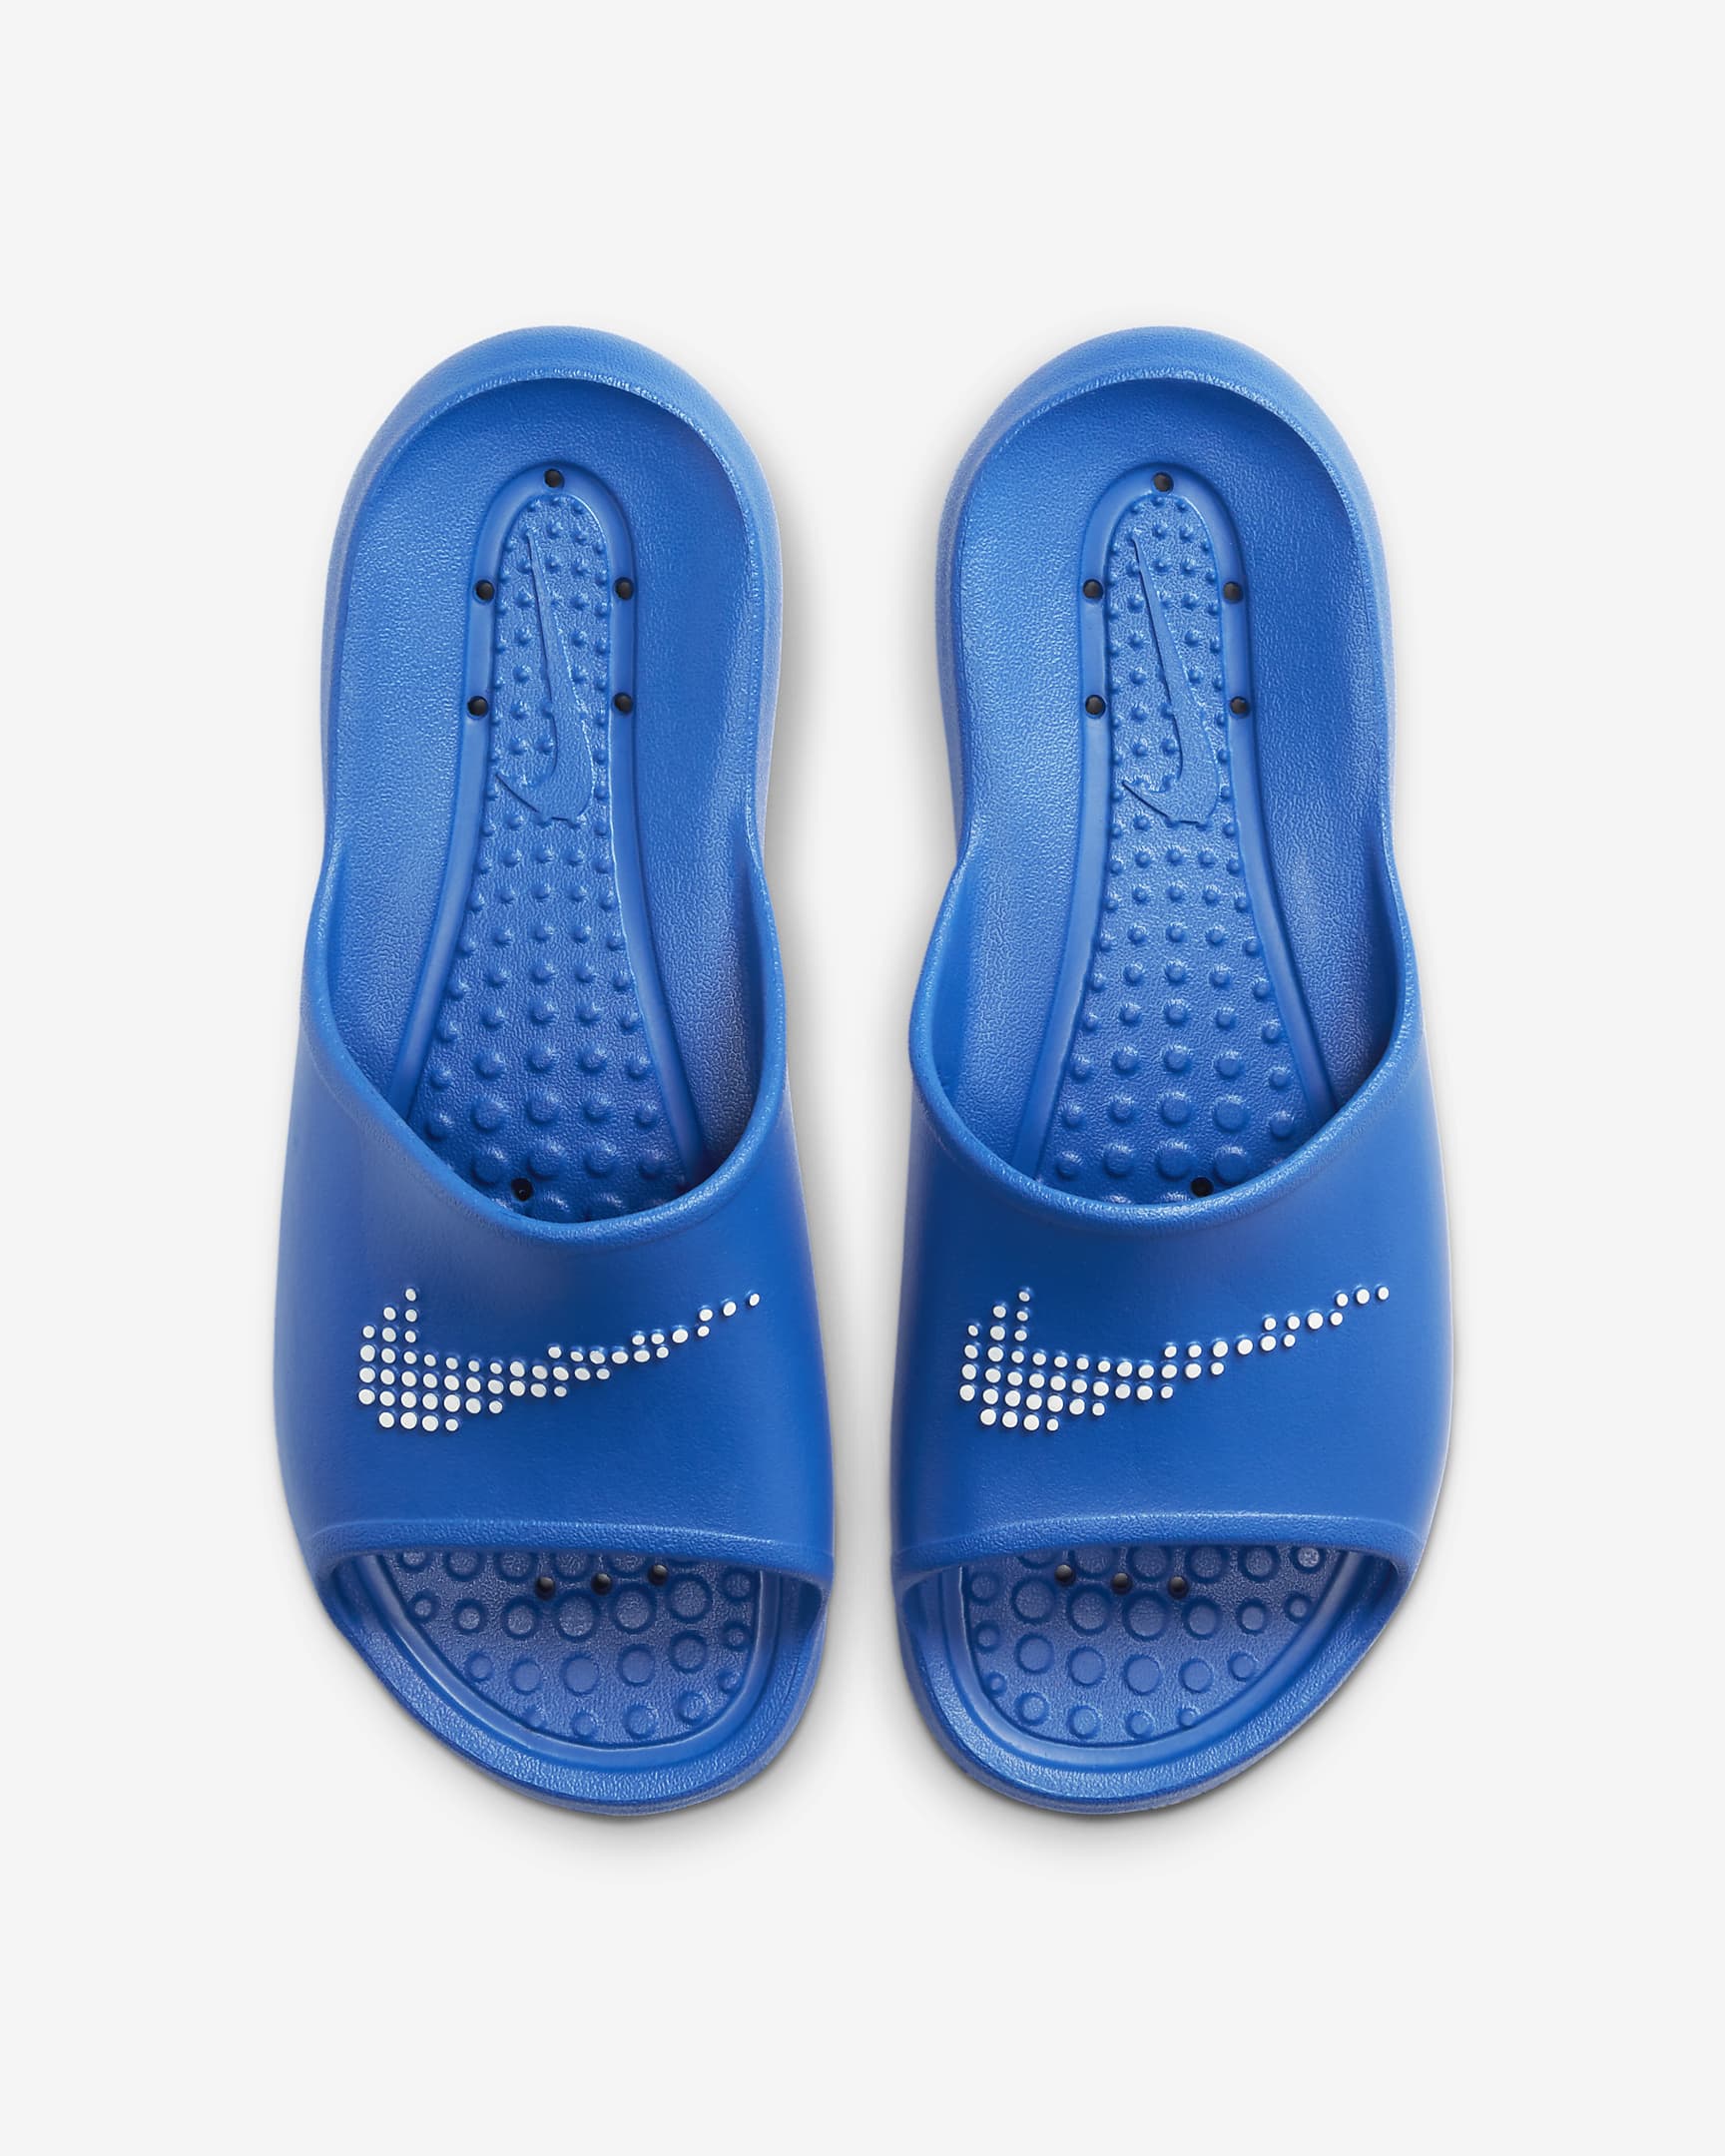 Nike Victori One Men's Shower Slides - Game Royal/Game Royal/White